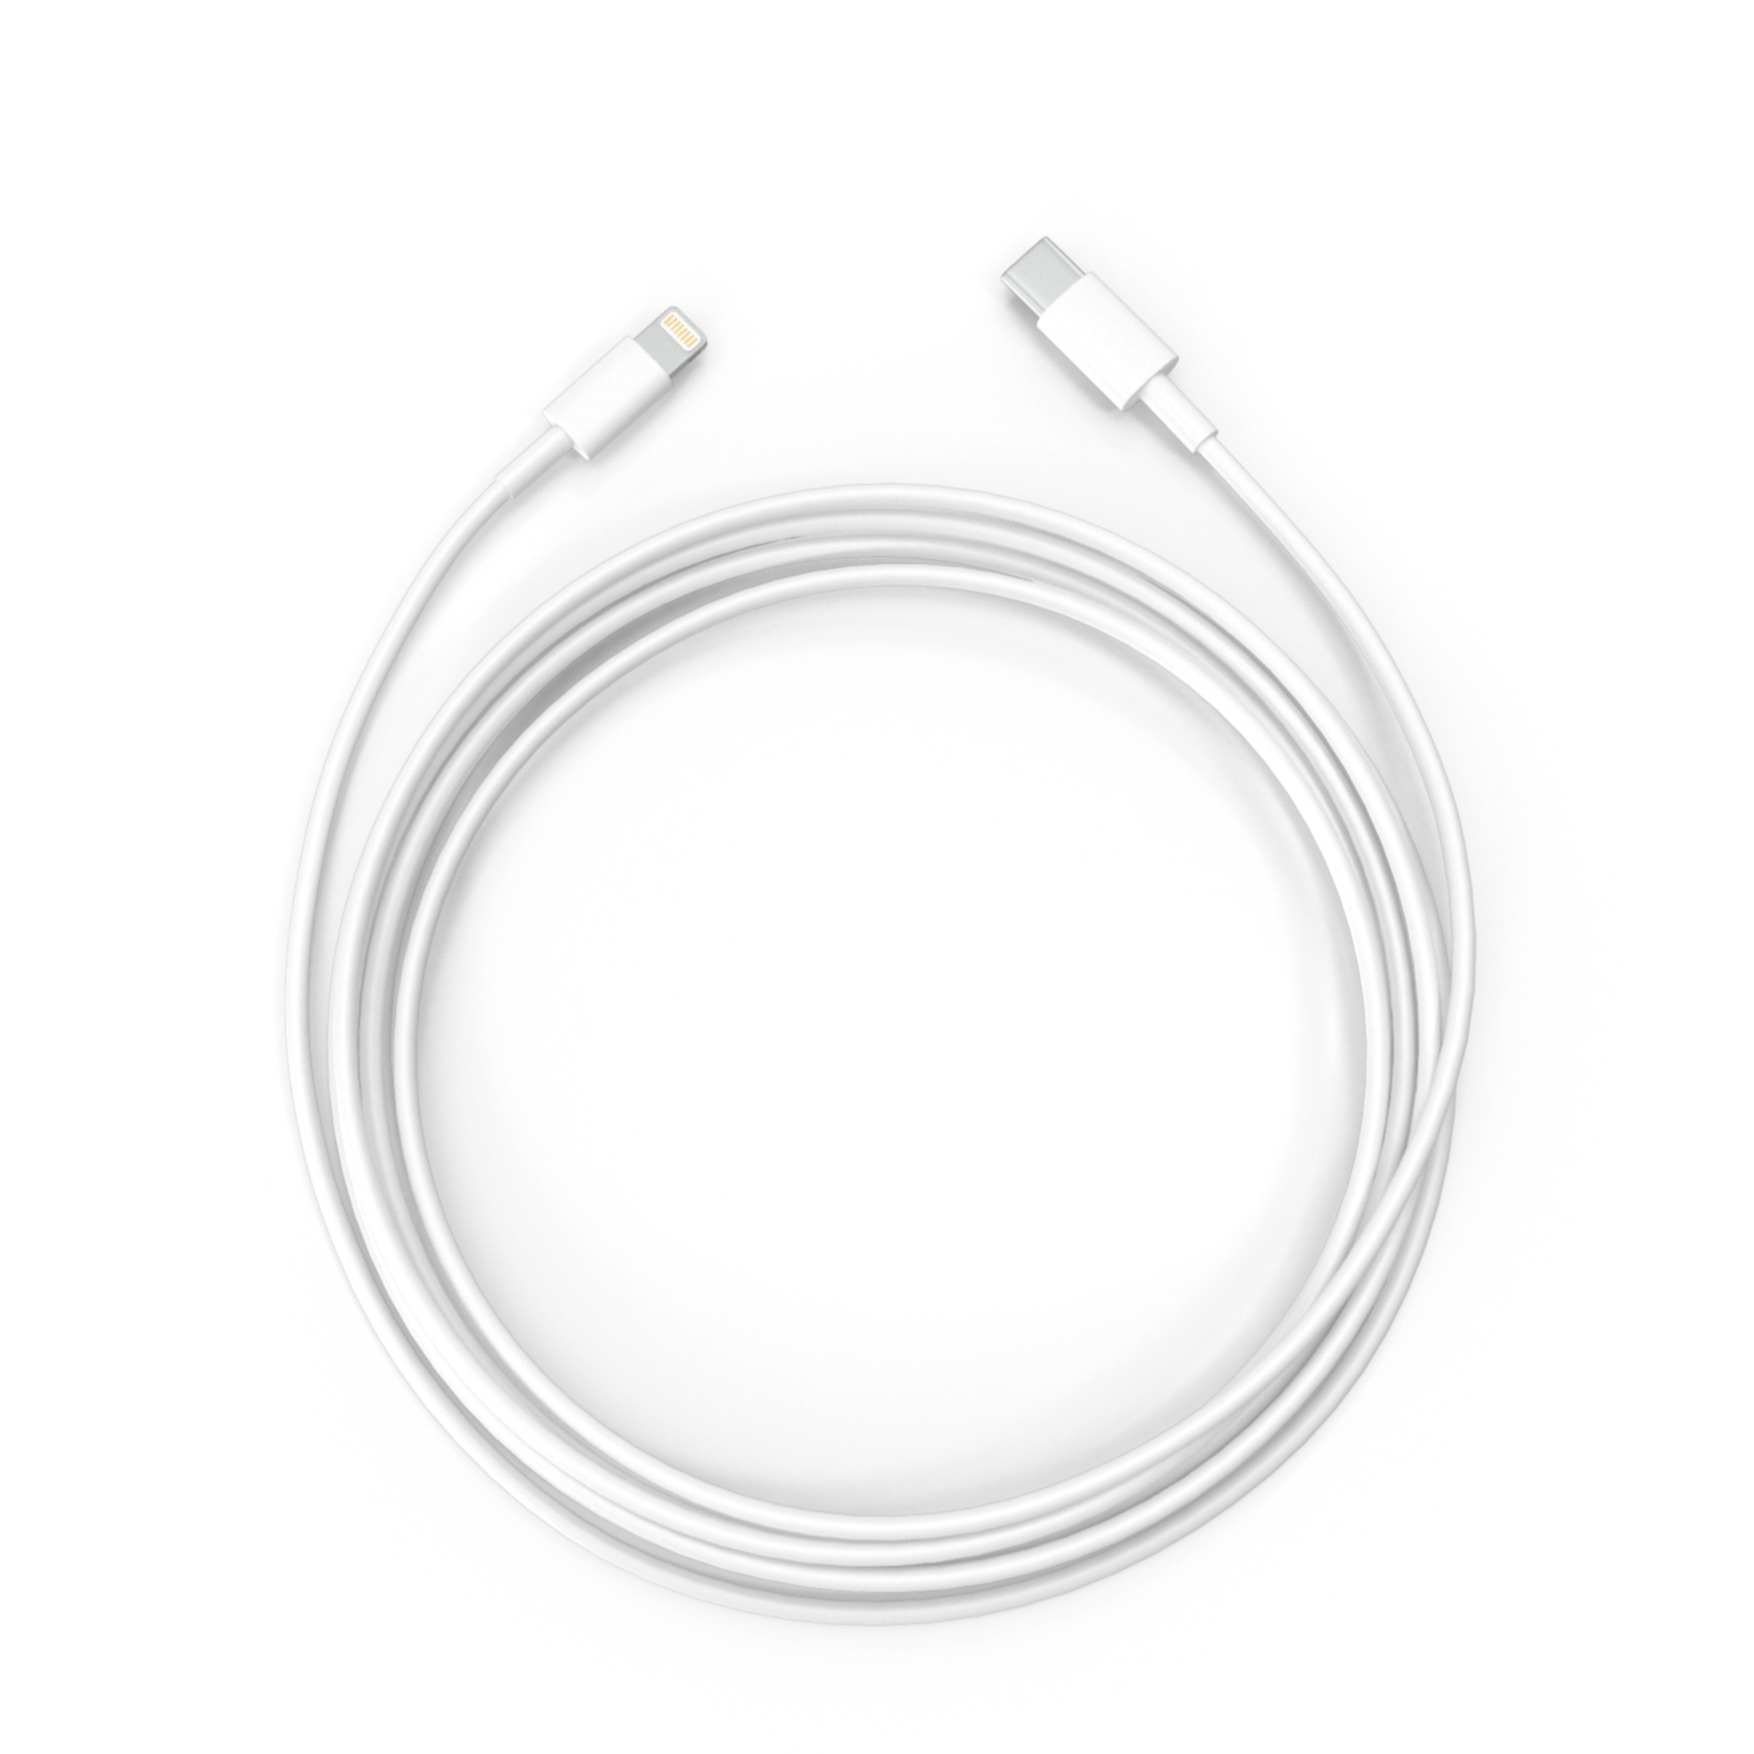 Image of Apple - (1m) iPhone 11 Lightning auf USB C Ladekabel Datenkabel MK0X2ZM/A - Weiss bei Apfelkiste.ch